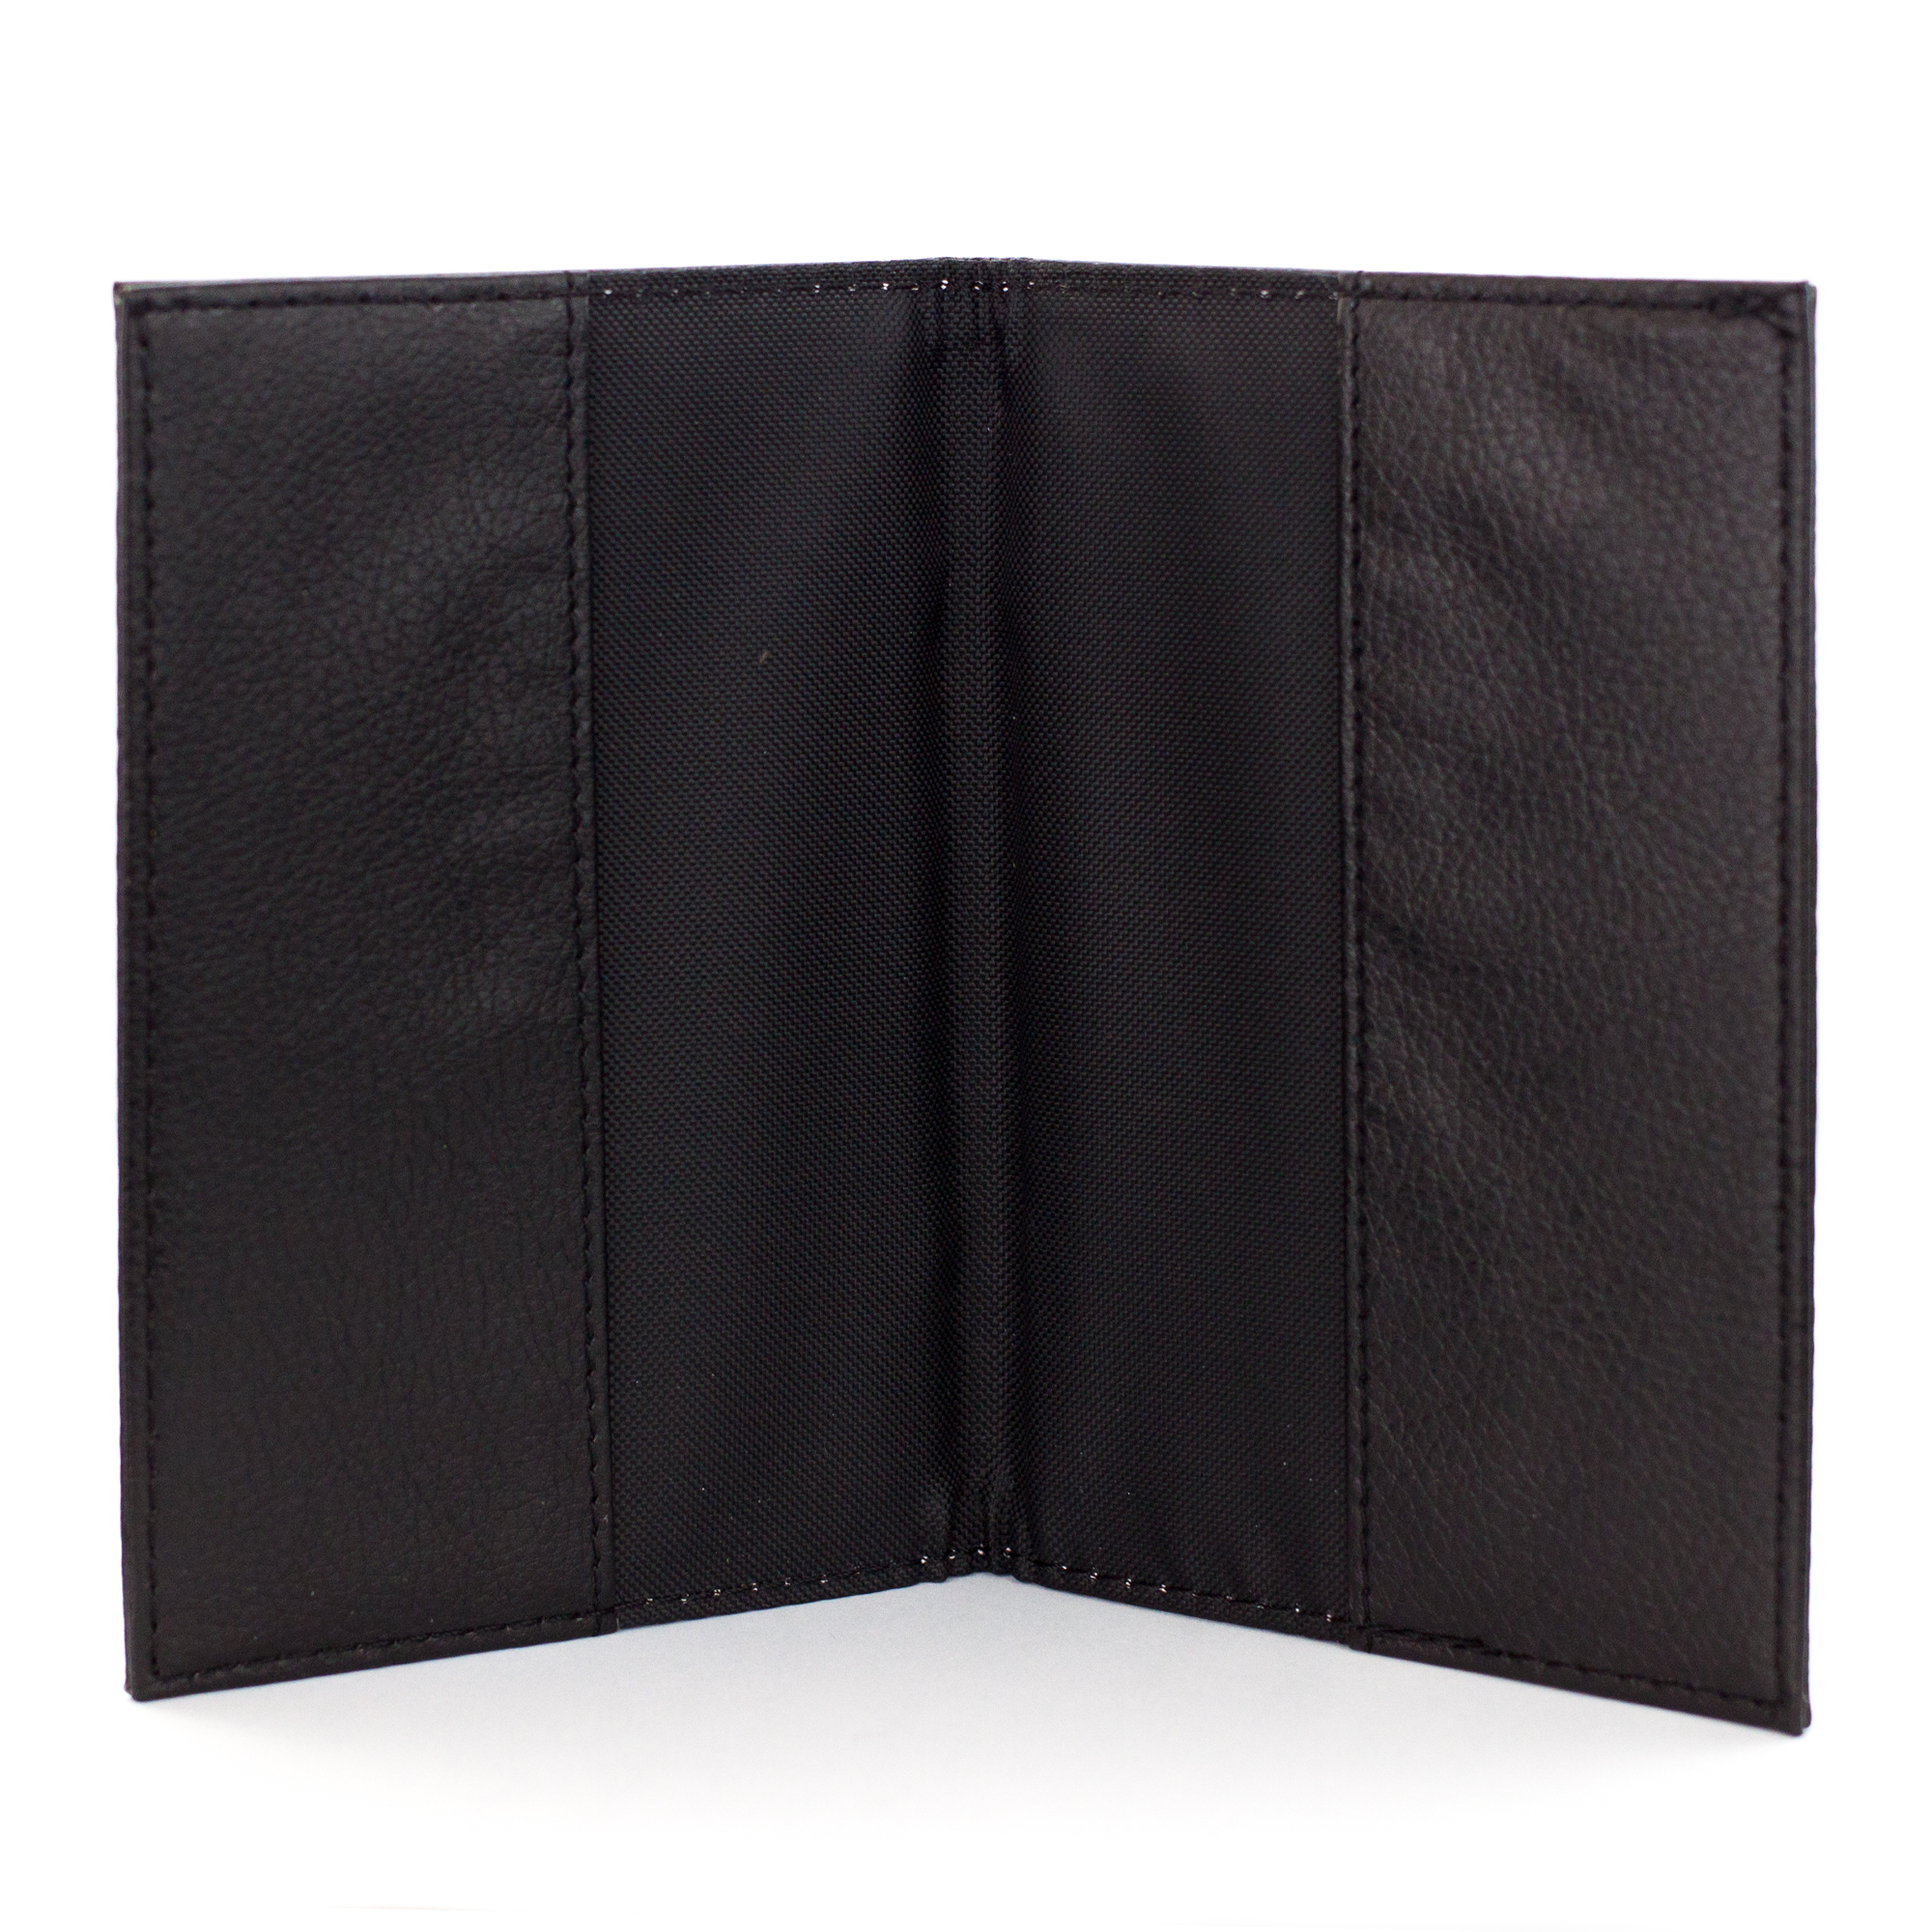 Vegan Leather RFID Blocking Passport Cover, Sturdy, Slim (Black) - image 4 of 4